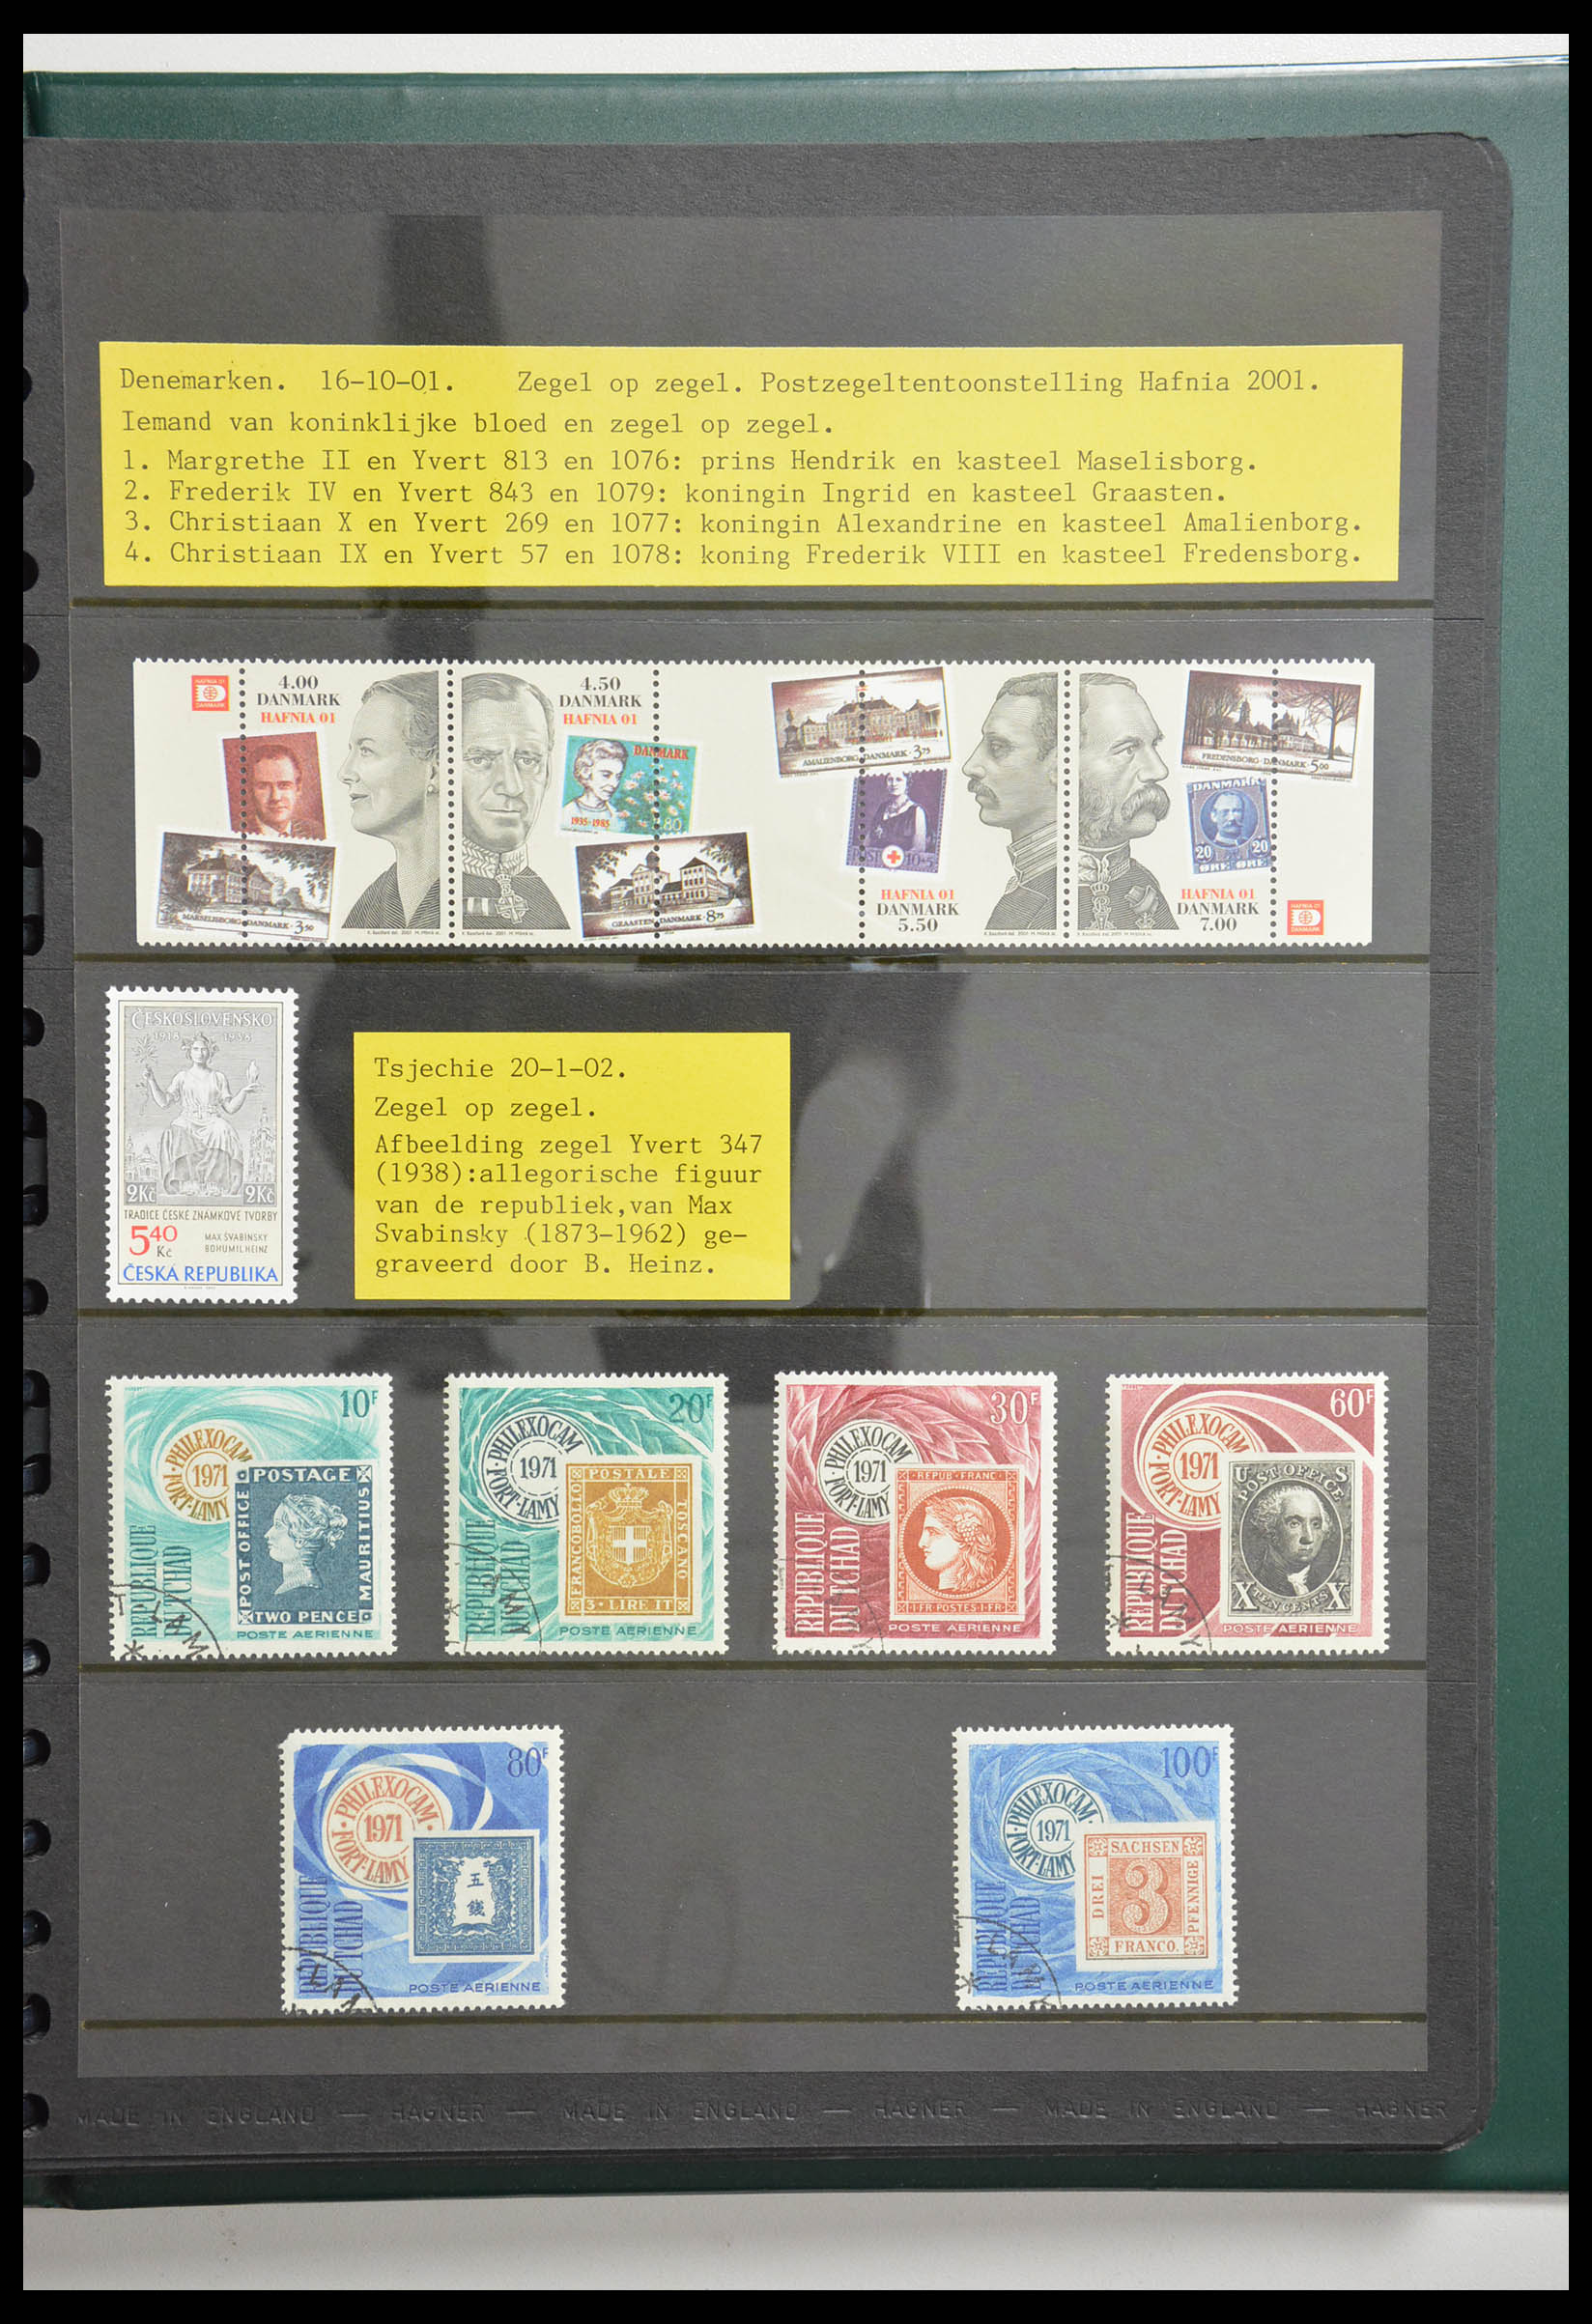 28337 065 - 28337 Postzegel op postzegel 1840-2001.